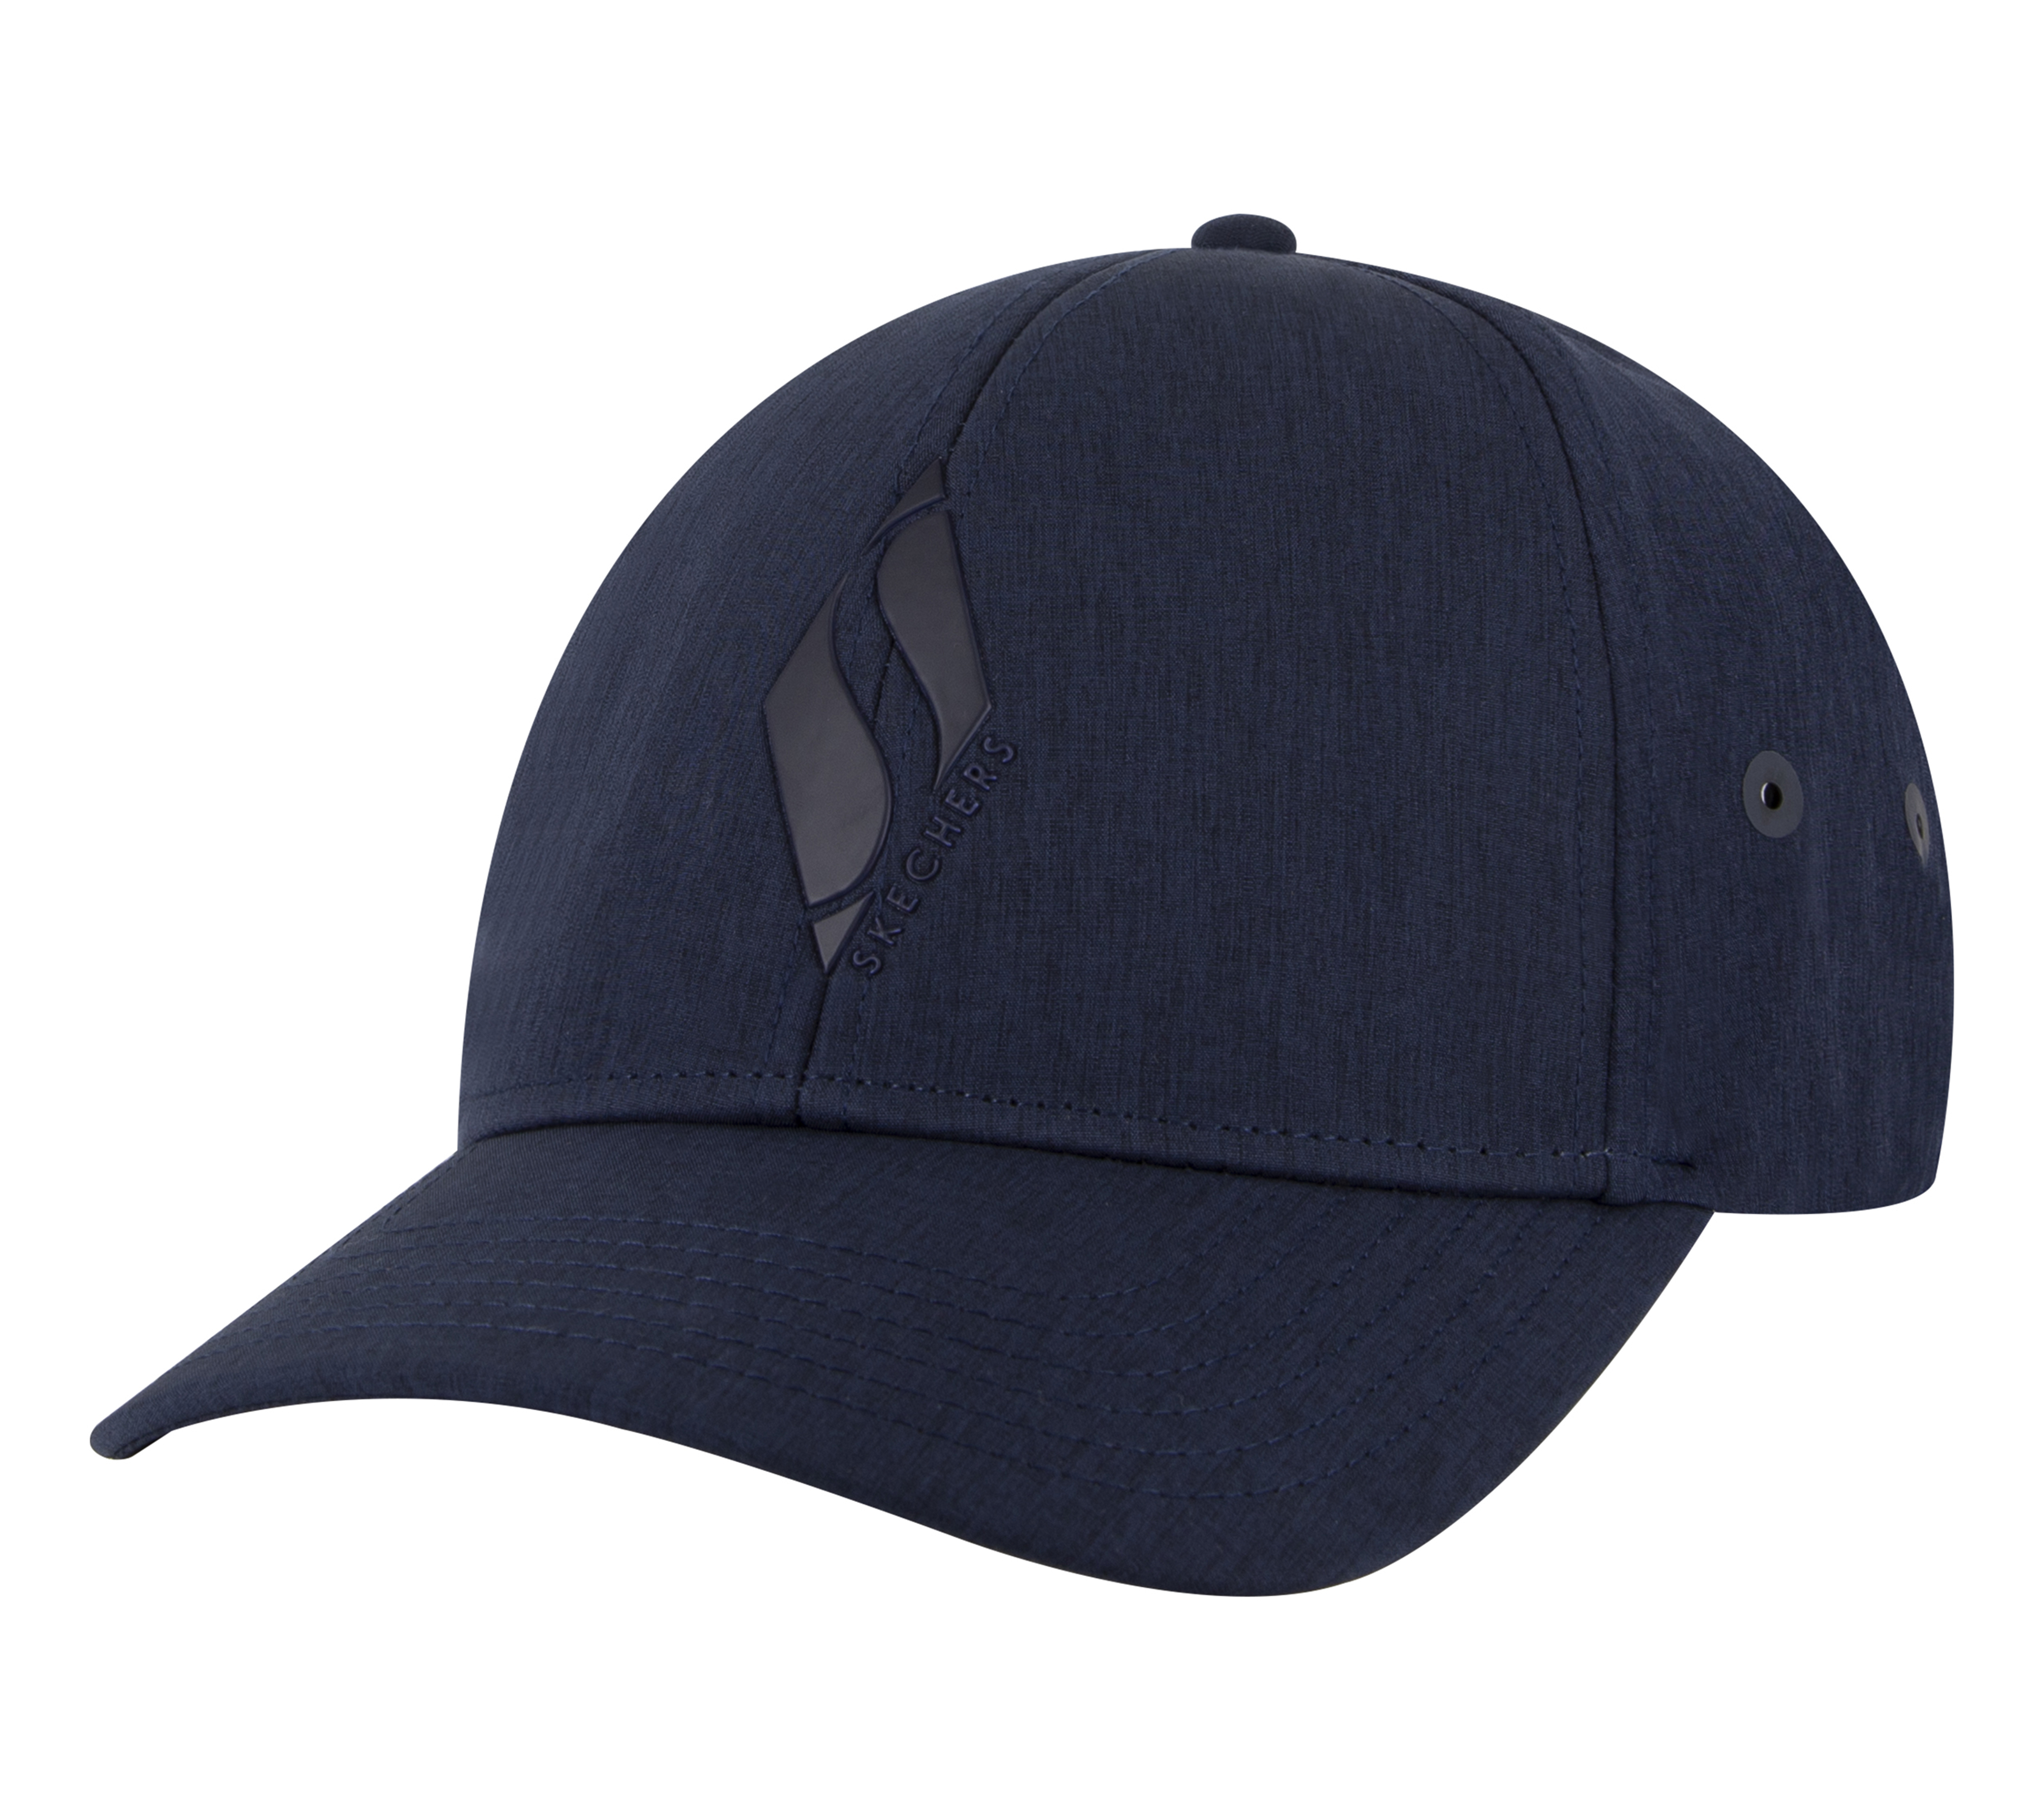 Skechers Men's Accessories - Diamond S Hat Navy Polyester/Spandex